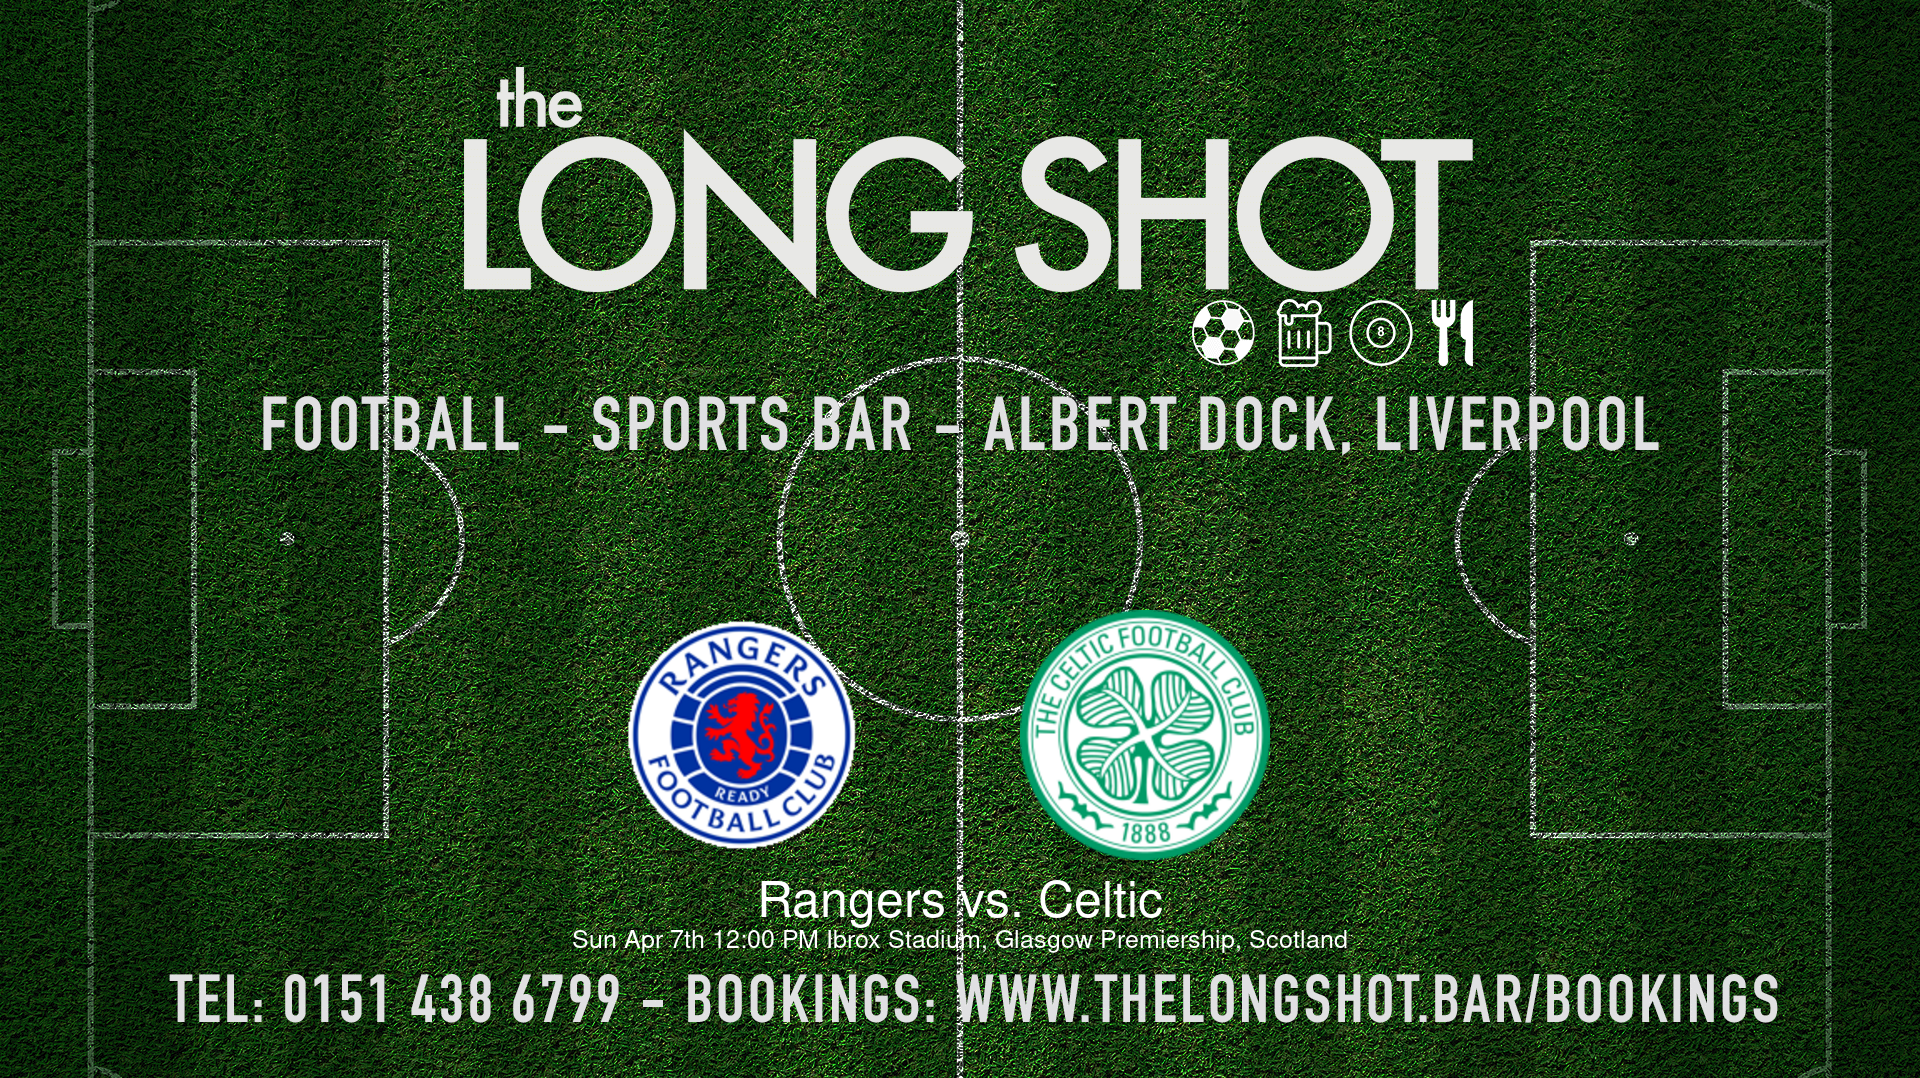 Event image - Rangers vs. Celtic